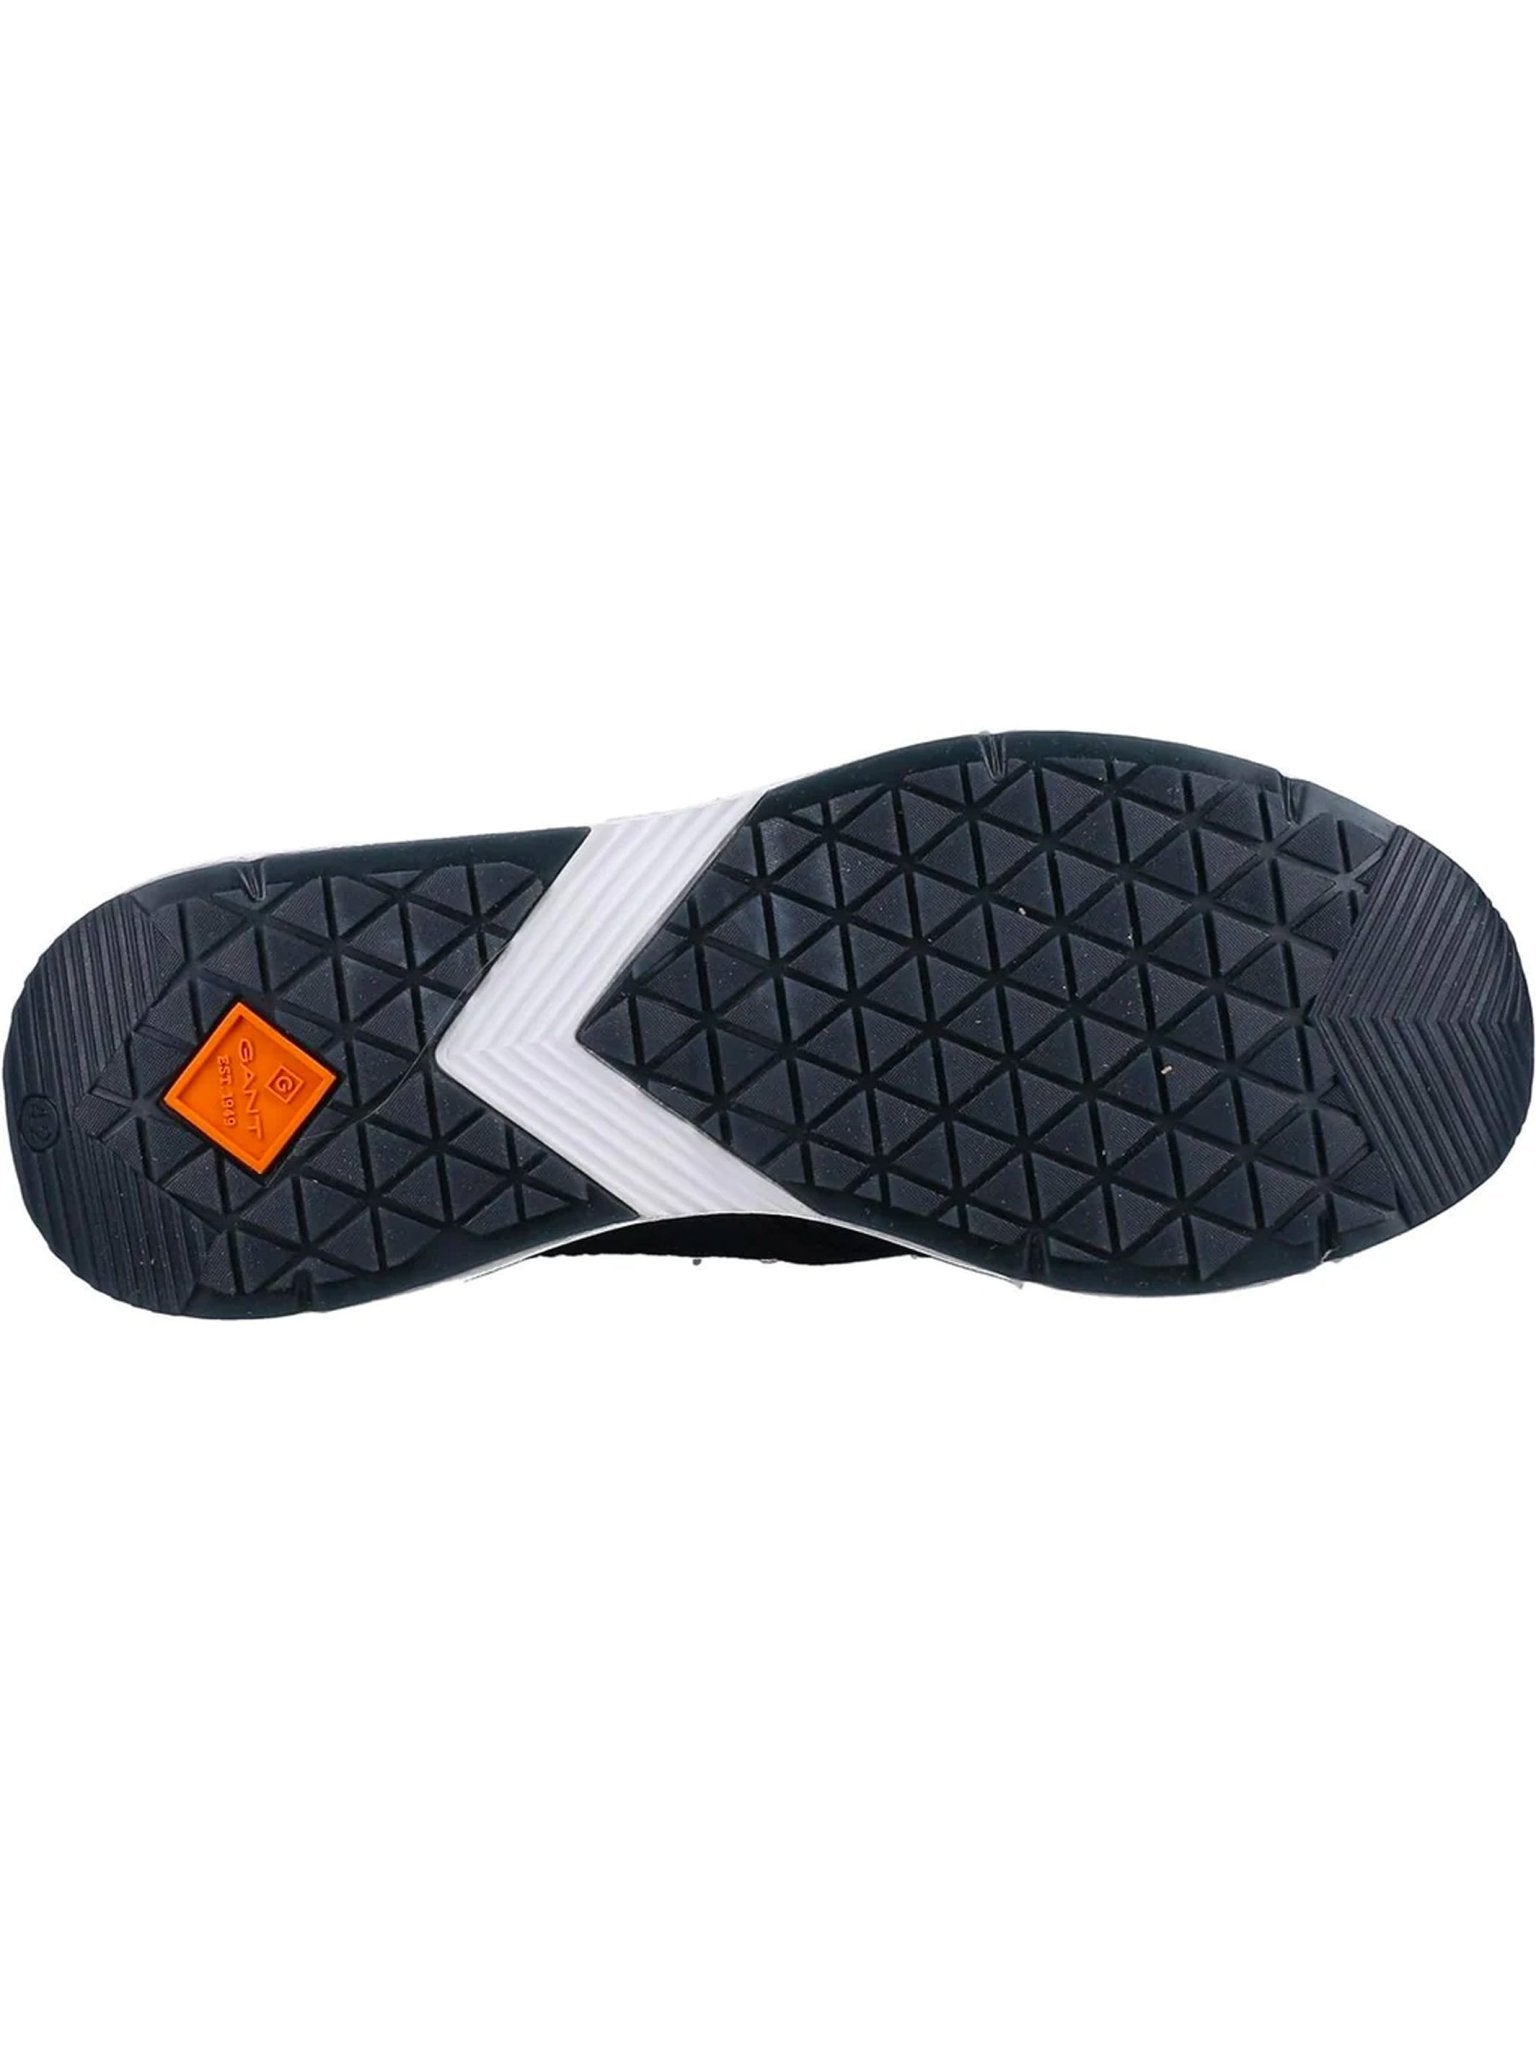 4elementsclothingGANTGANT - Beeker G69 3D Knit & Leather Mens Trainer / Gant SneakerShoes4056734707292